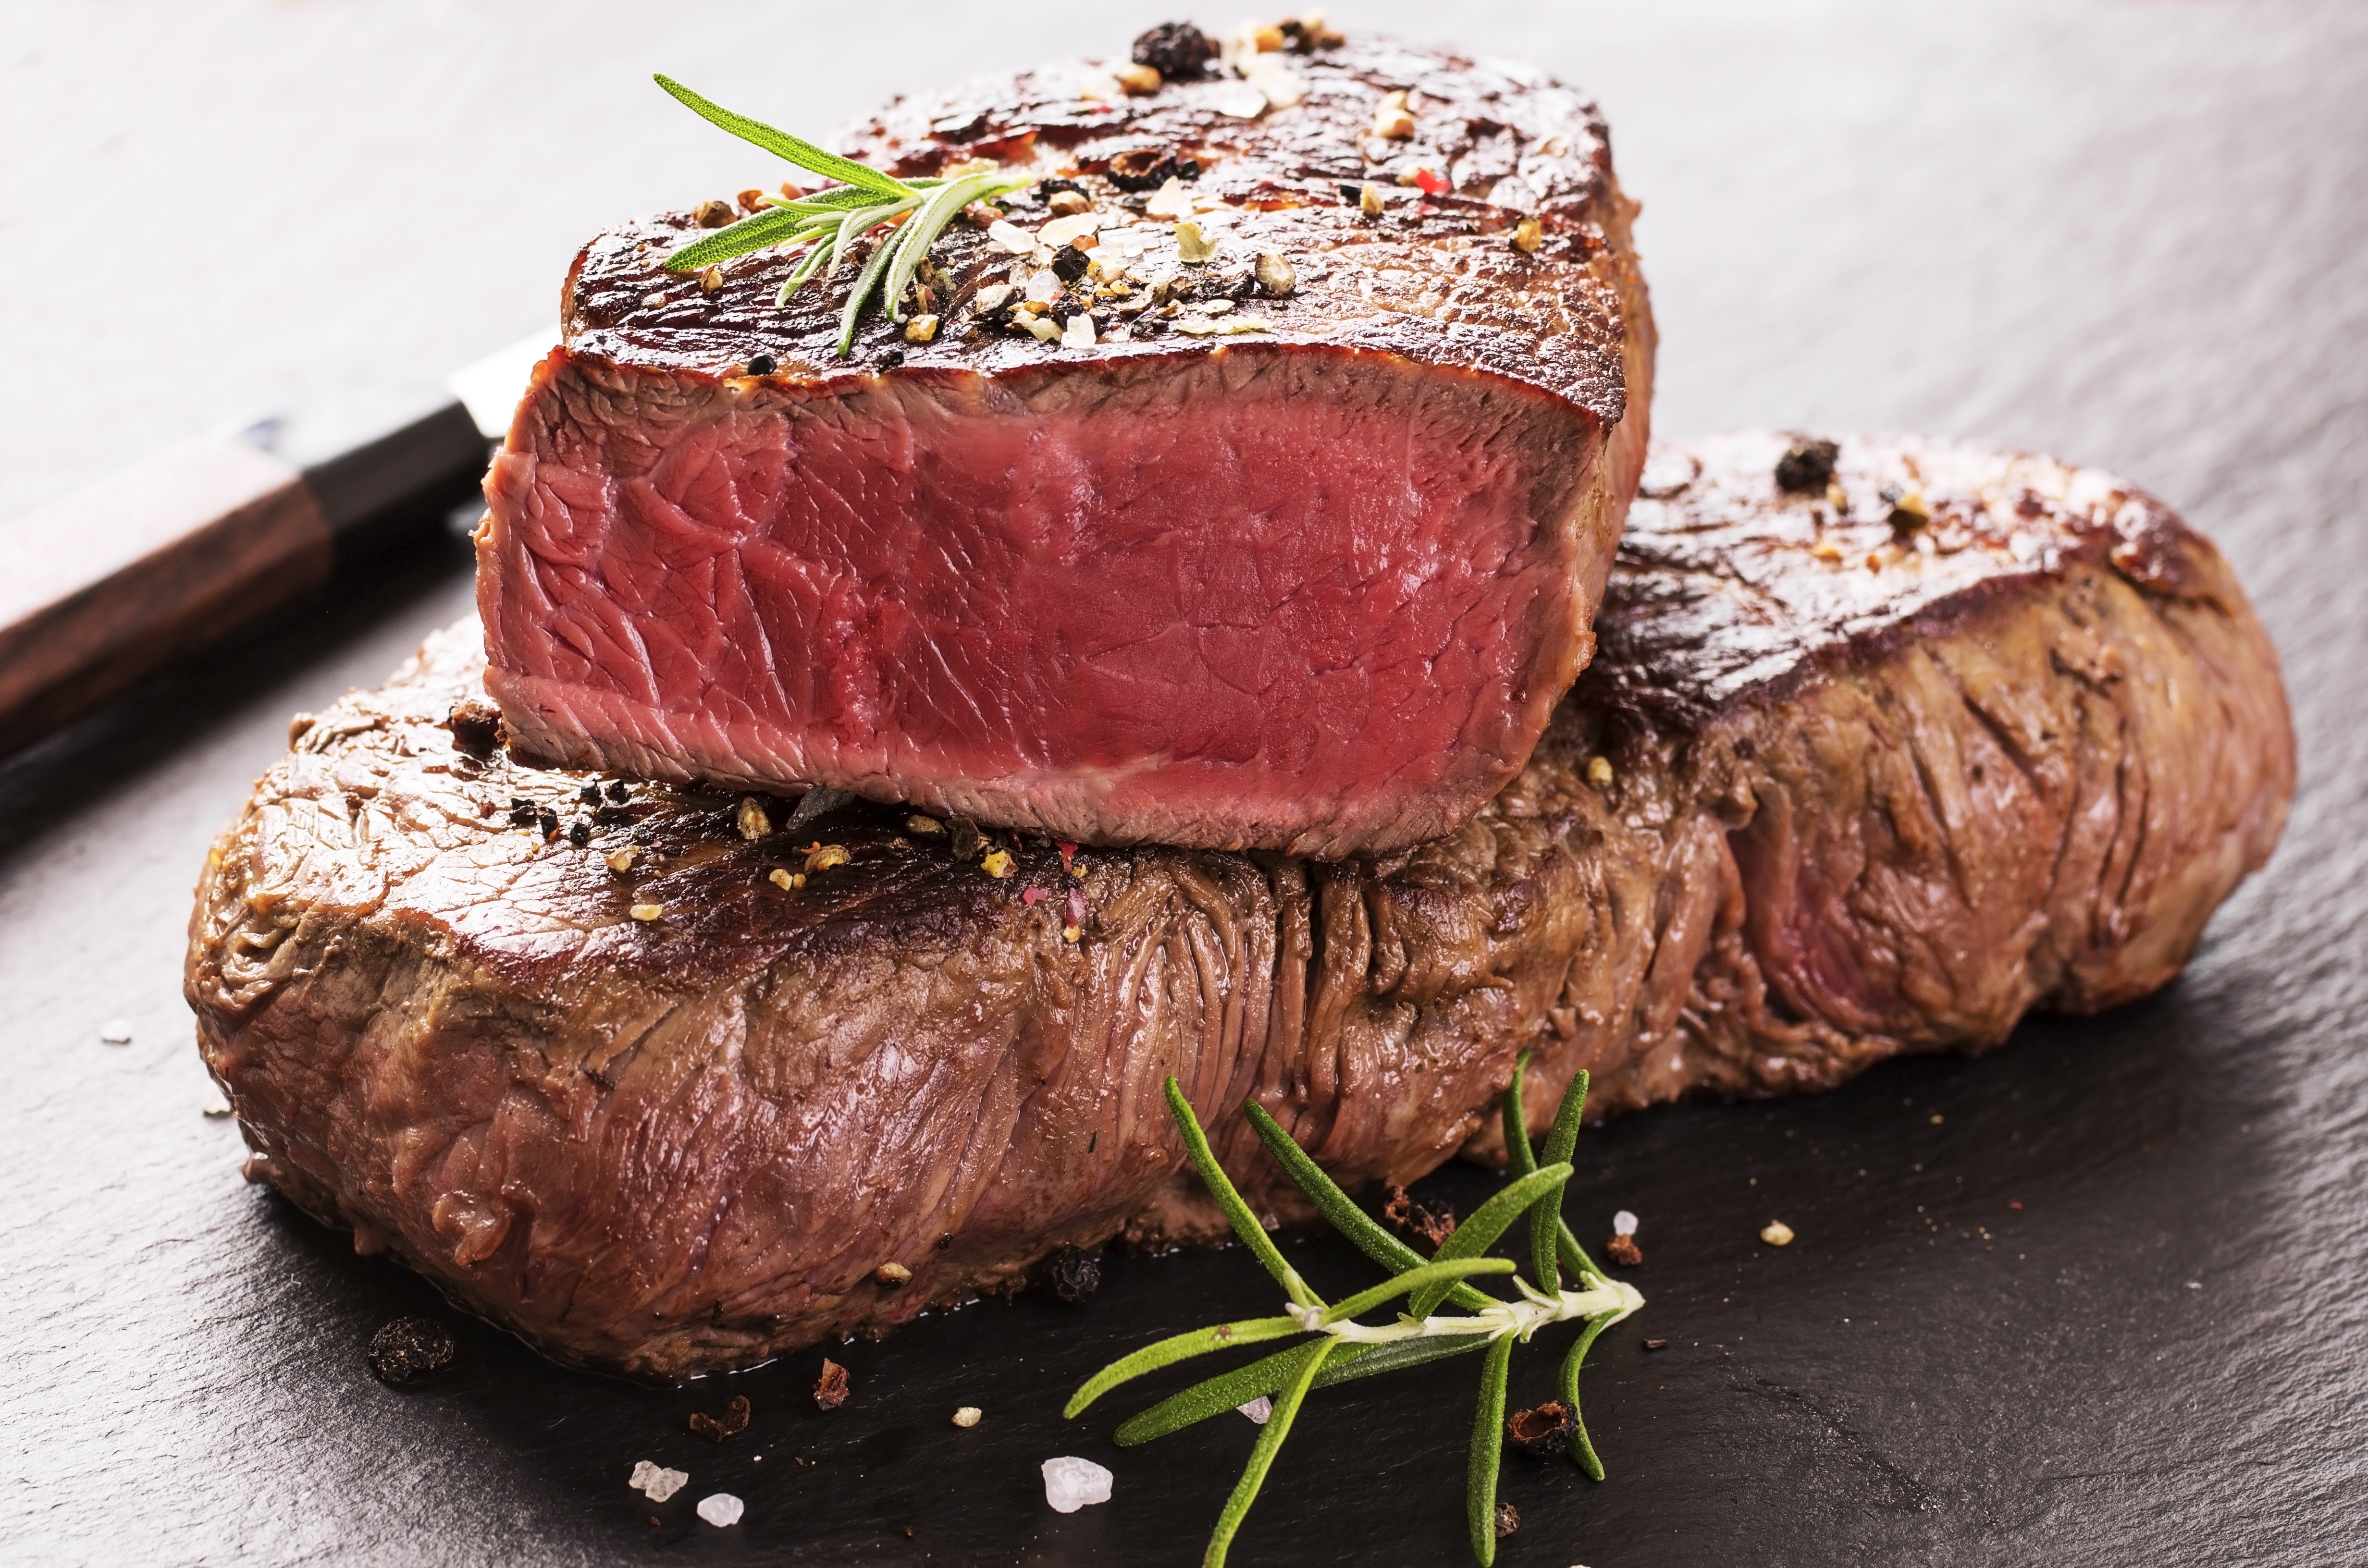 Steak_image_from_Shutterstock_145058521.jpg